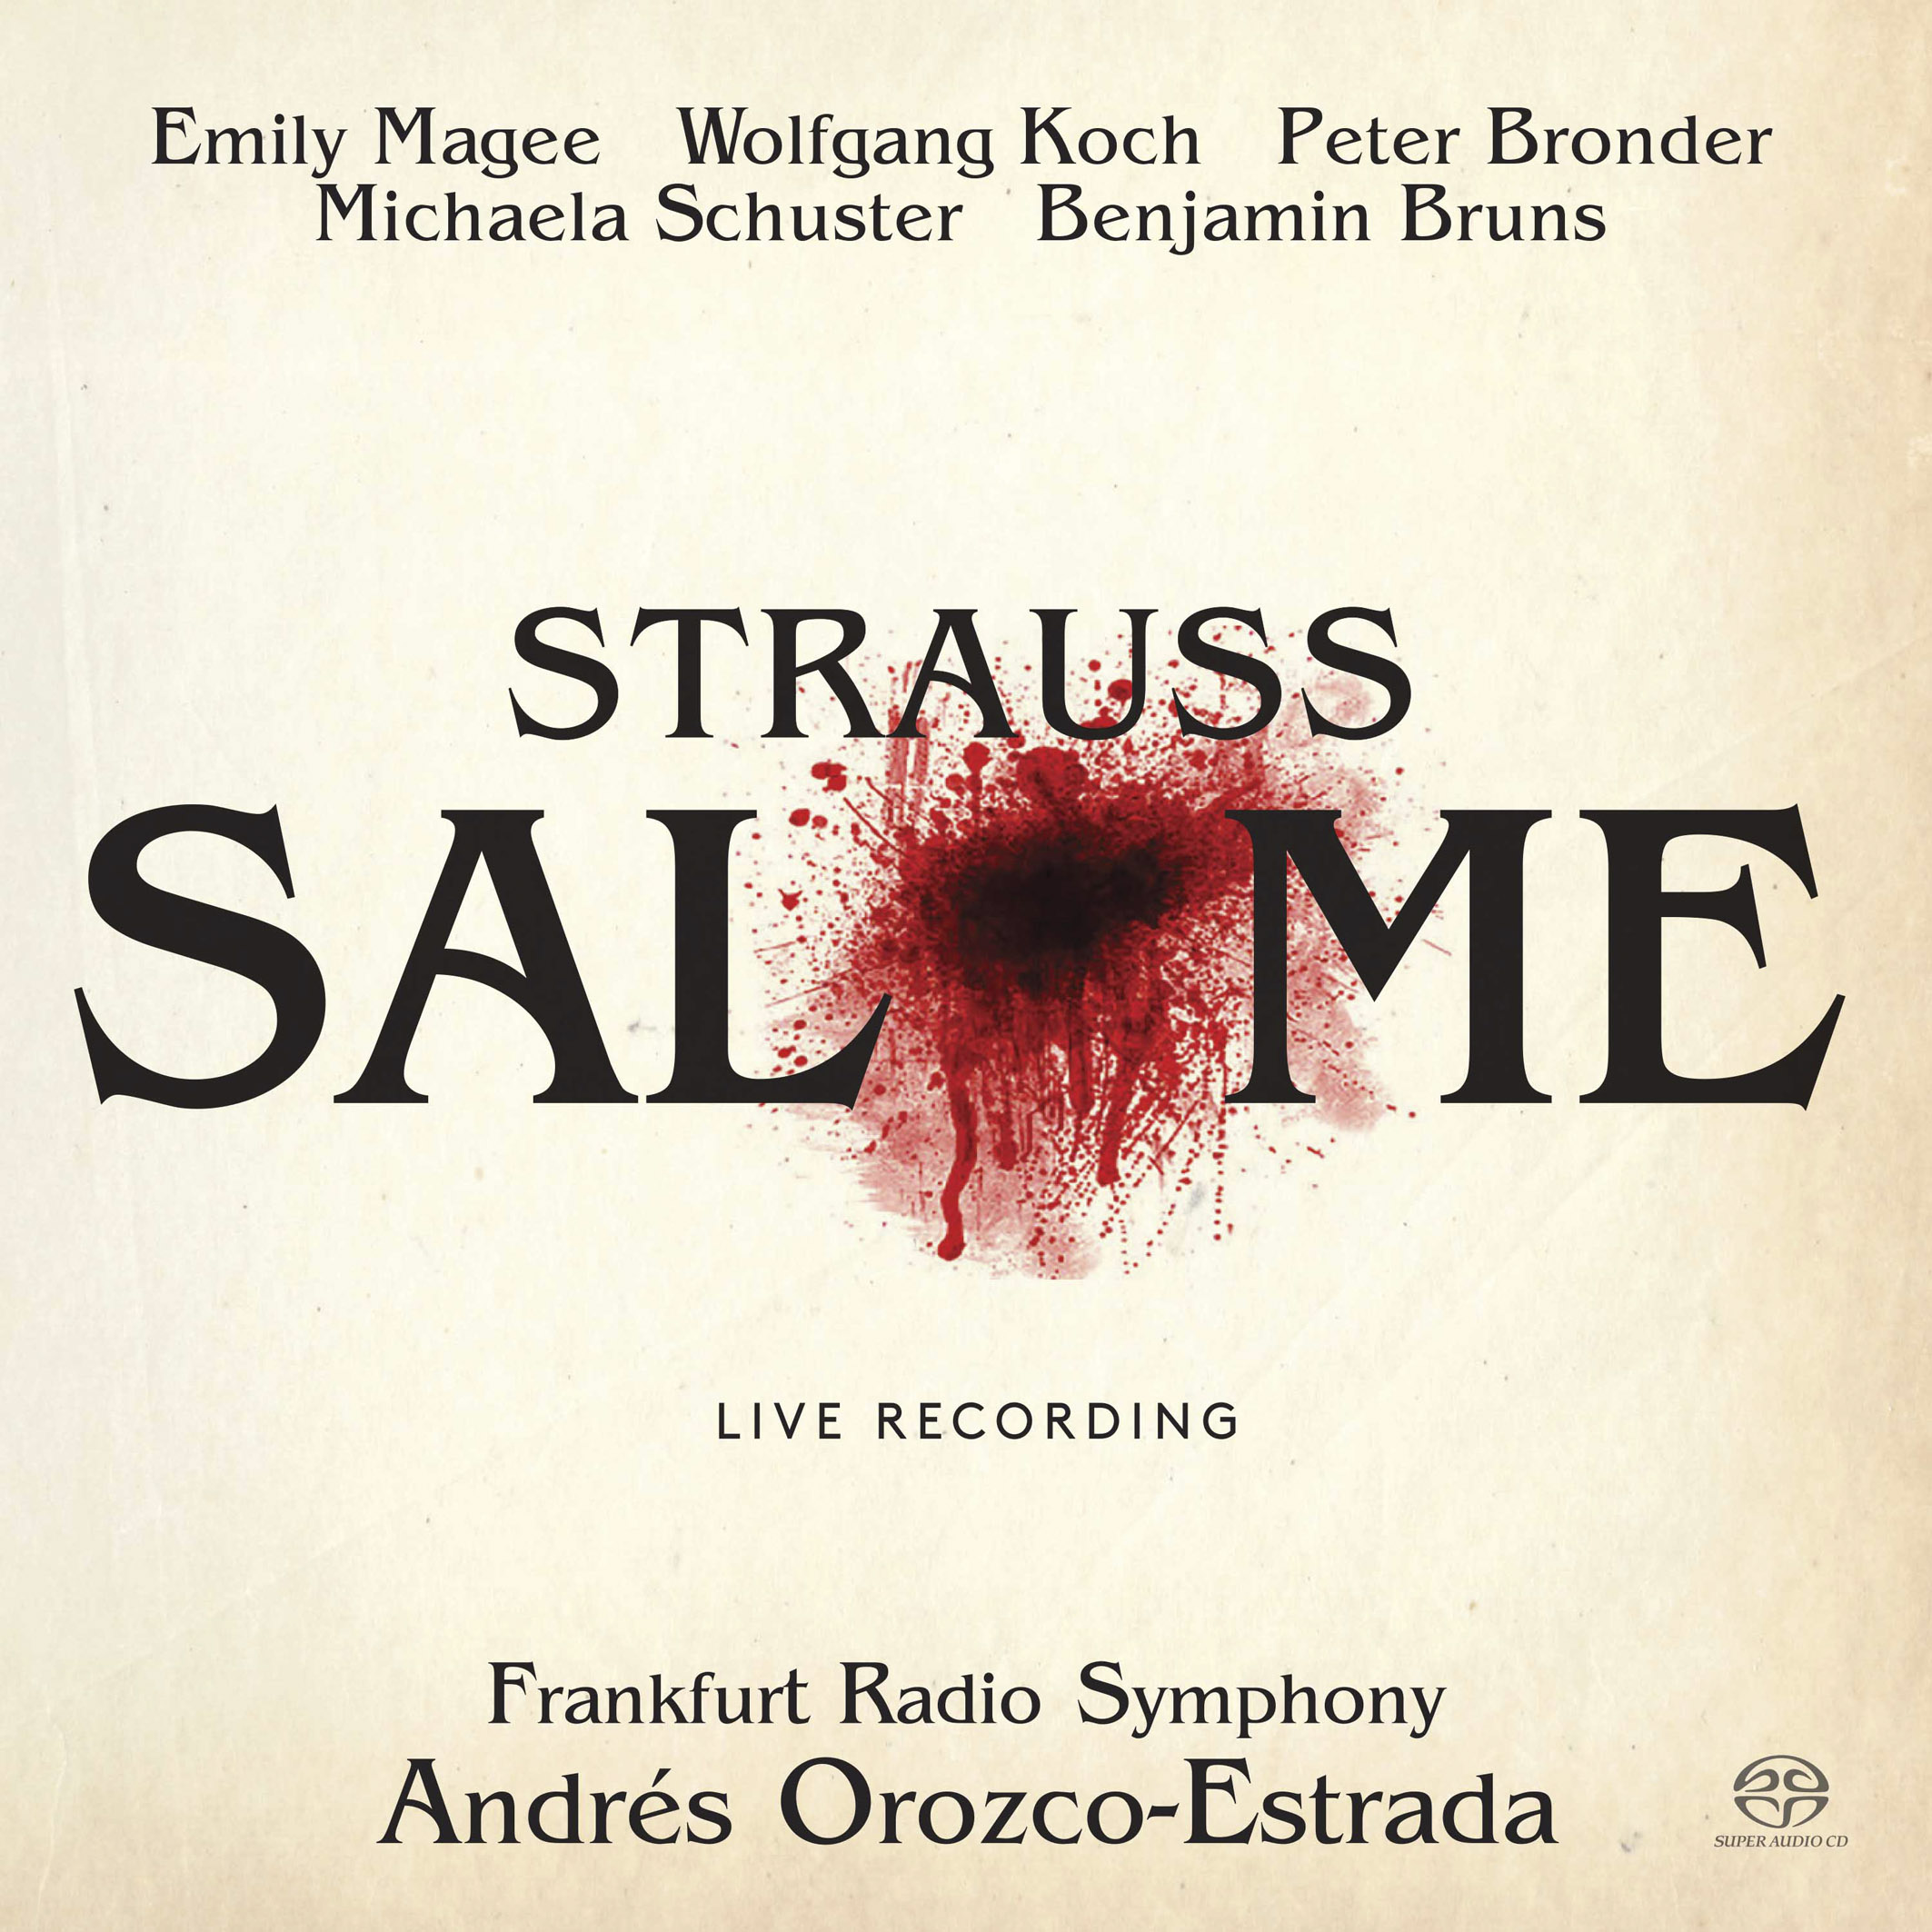 Salome, Emily Magee, Frankfurt Radio Symphony, Andrés Orozco-Estrada